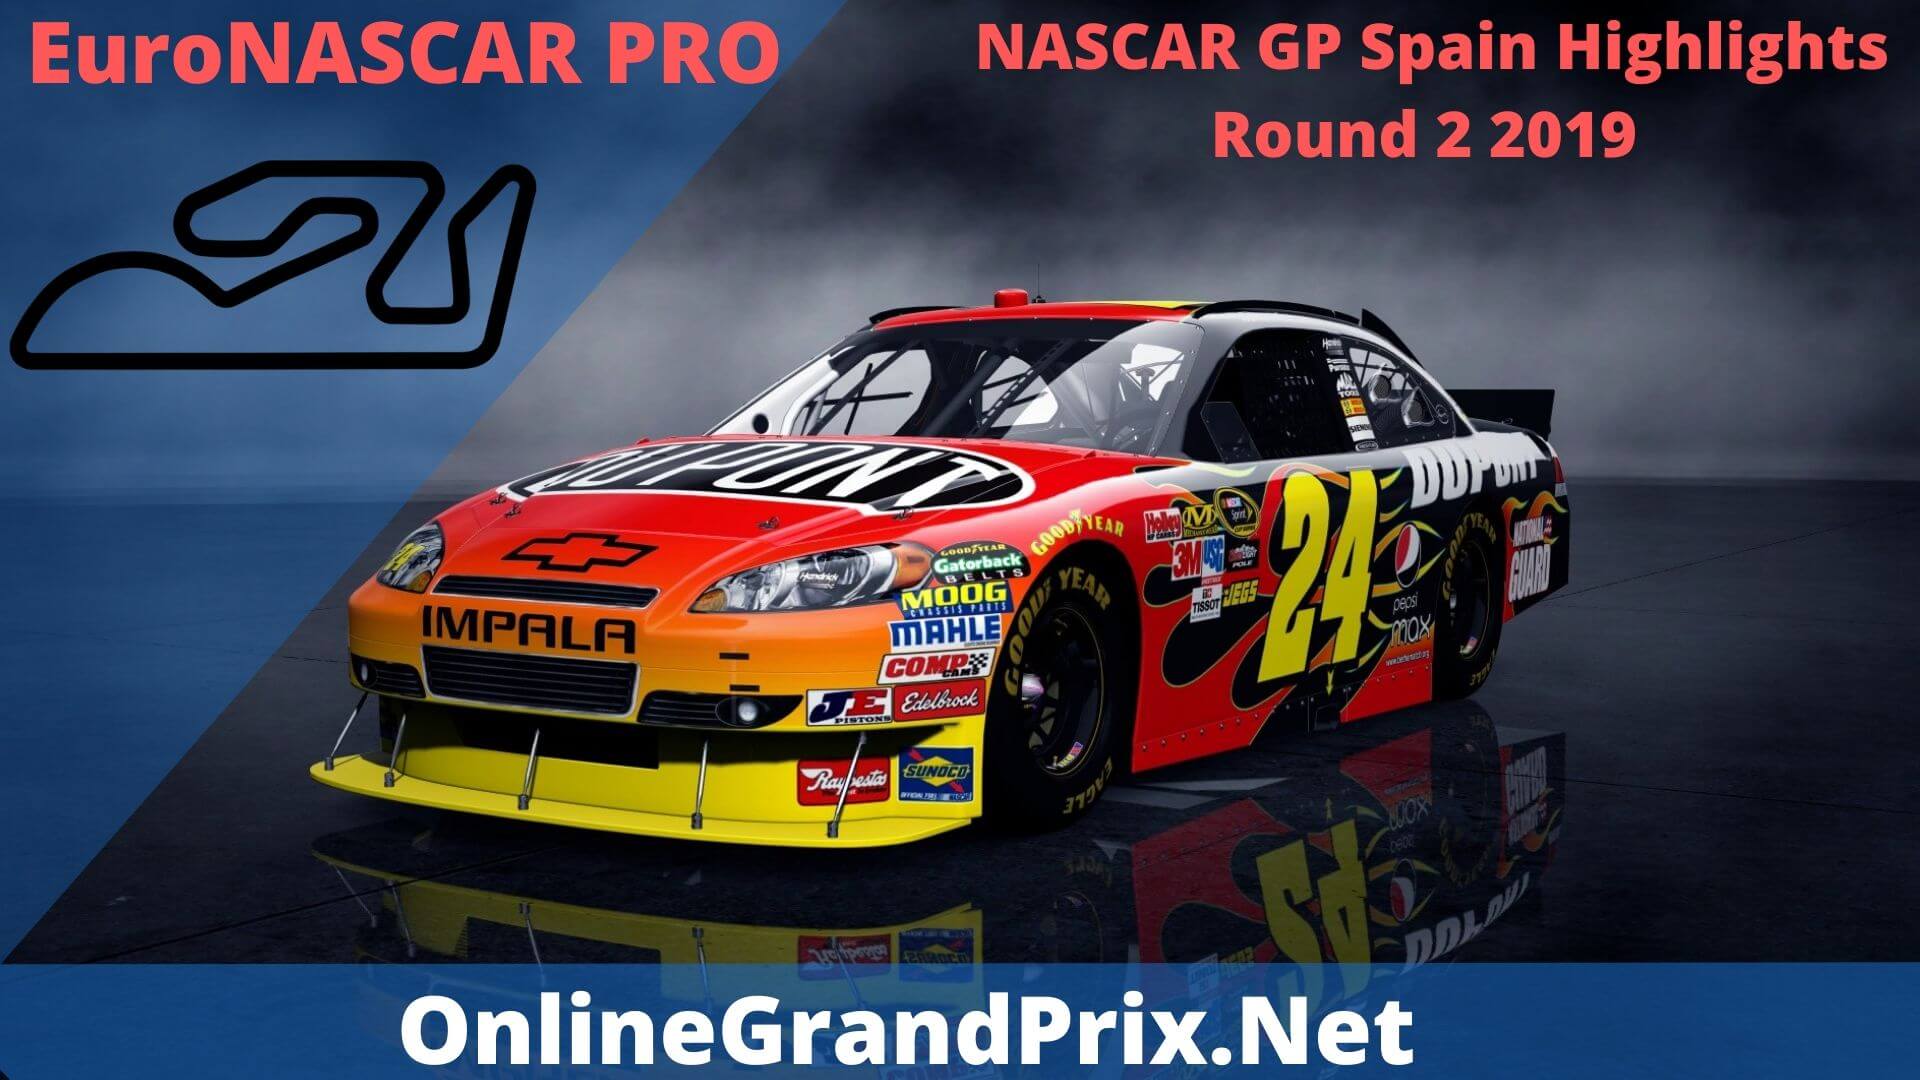 NASCAR GP Spain Round 2 Highlights 2019